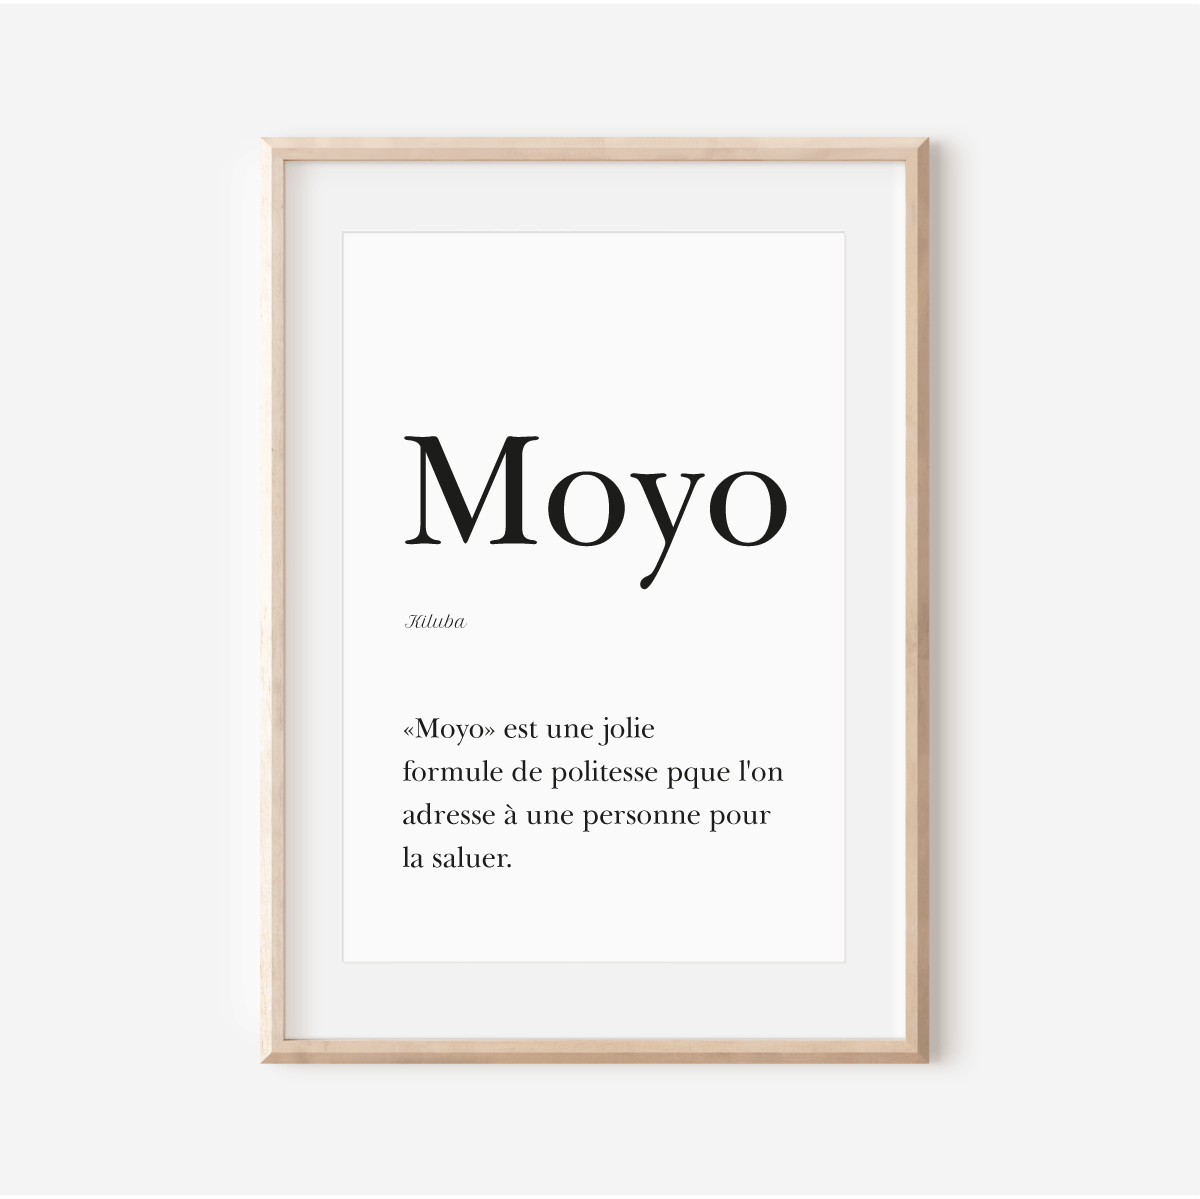 Affiche "Moyo" - Bonjour en Kiluba (Luba Katanga)